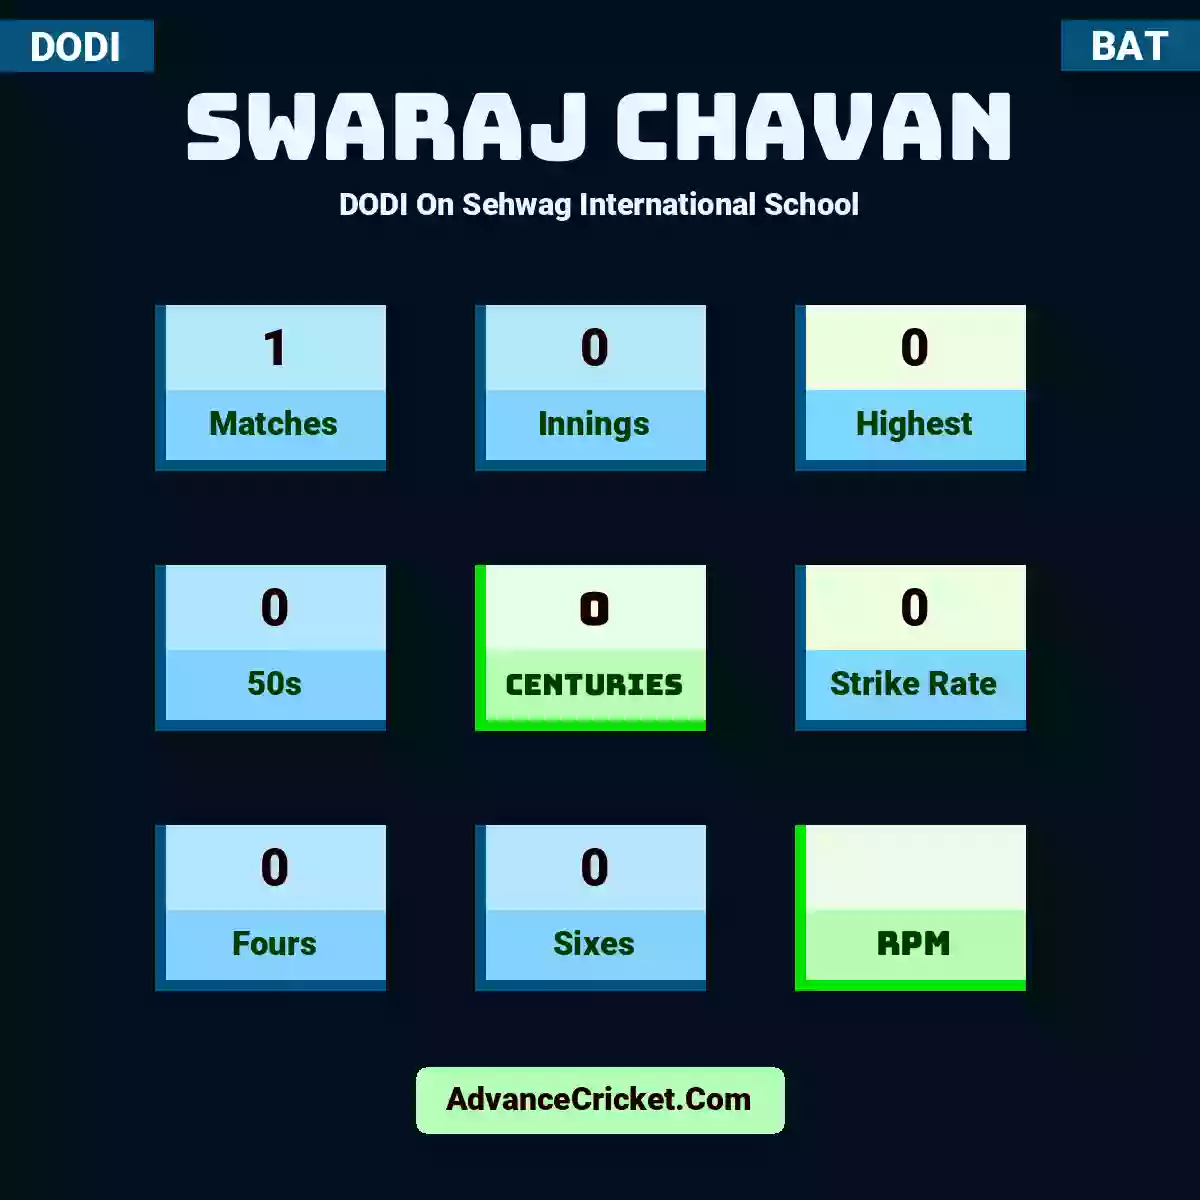 Swaraj Chavan DODI  On Sehwag International School, Swaraj Chavan played 1 matches, scored 0 runs as highest, 0 half-centuries, and 0 centuries, with a strike rate of 0. S.Chavan hit 0 fours and 0 sixes.